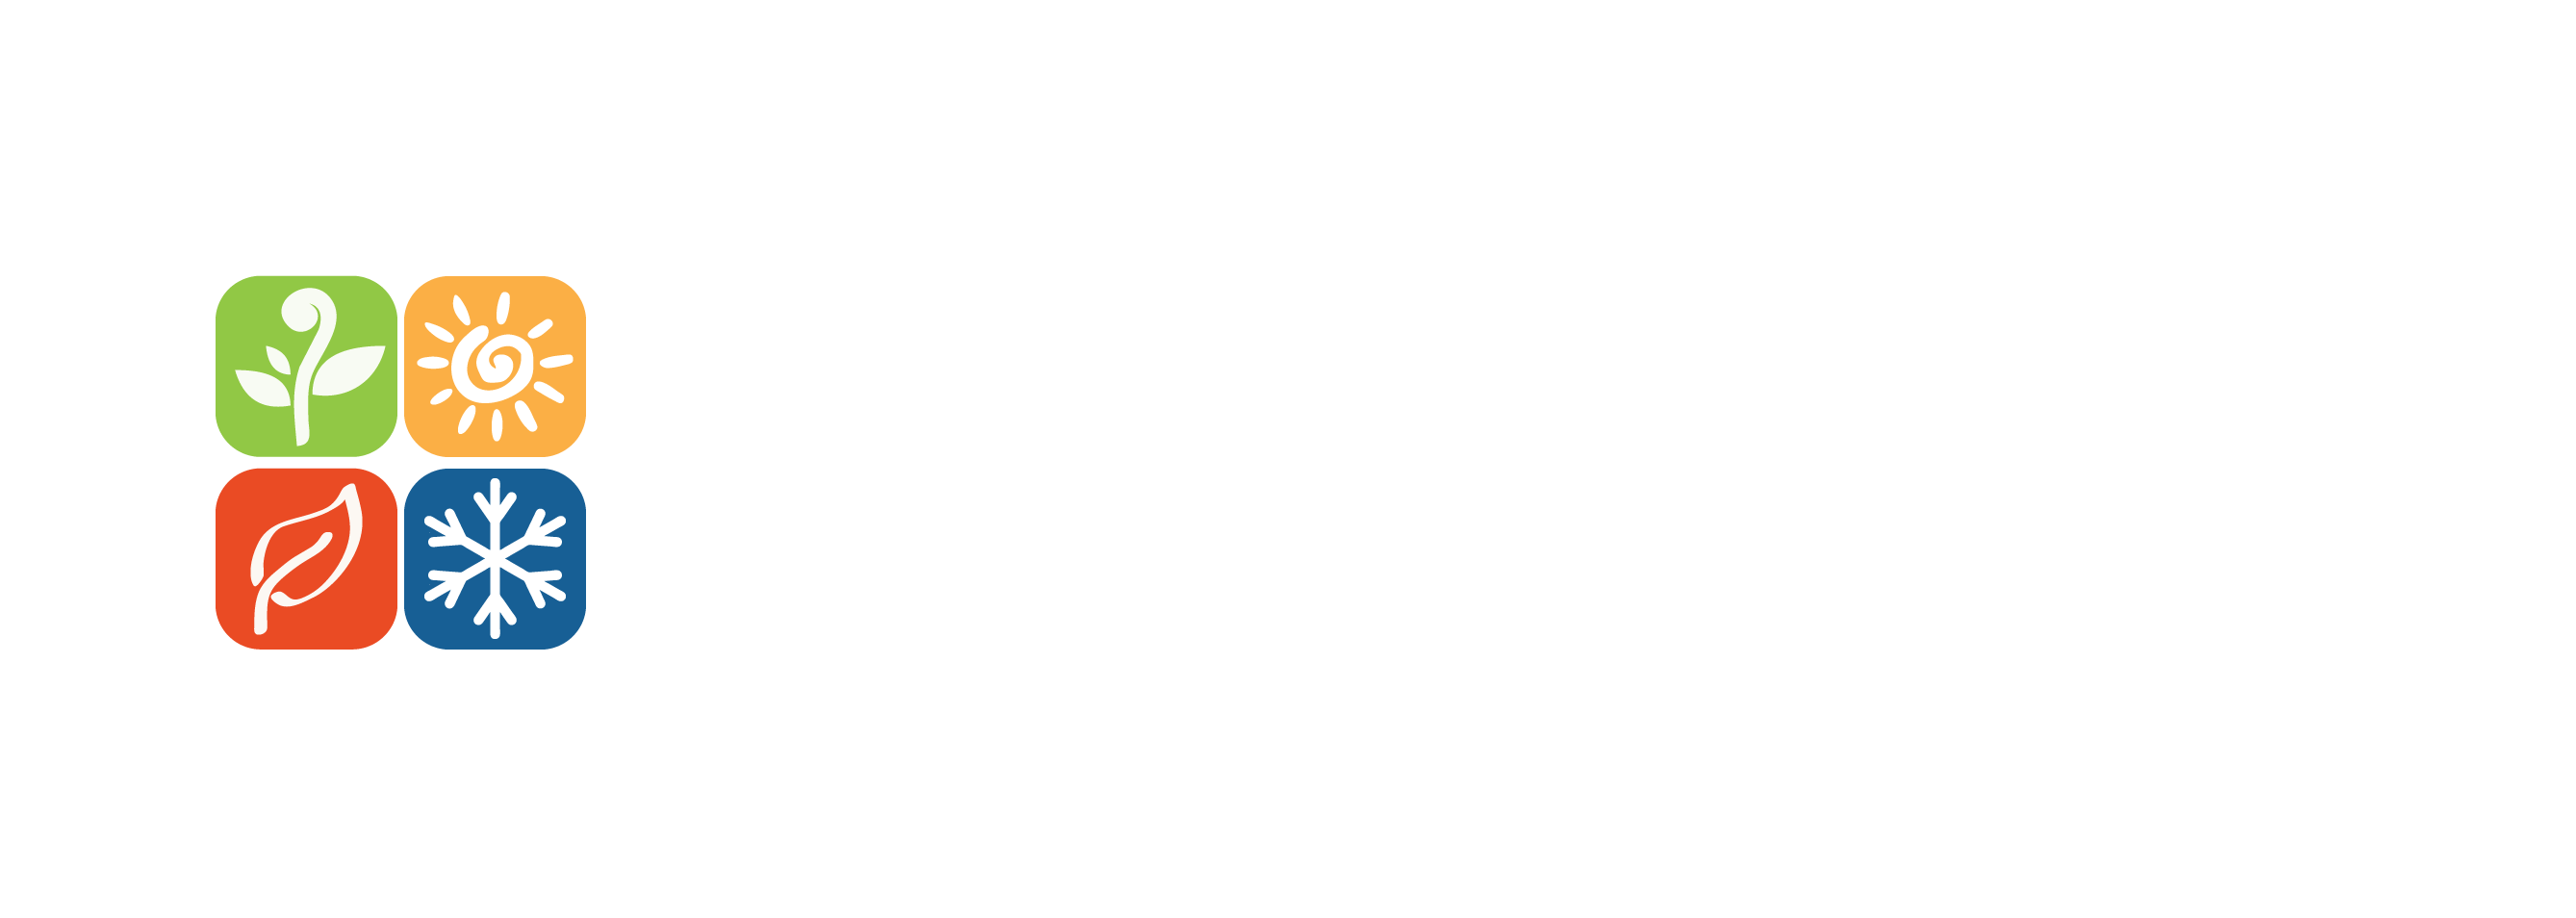 png-seasons-creative-productions